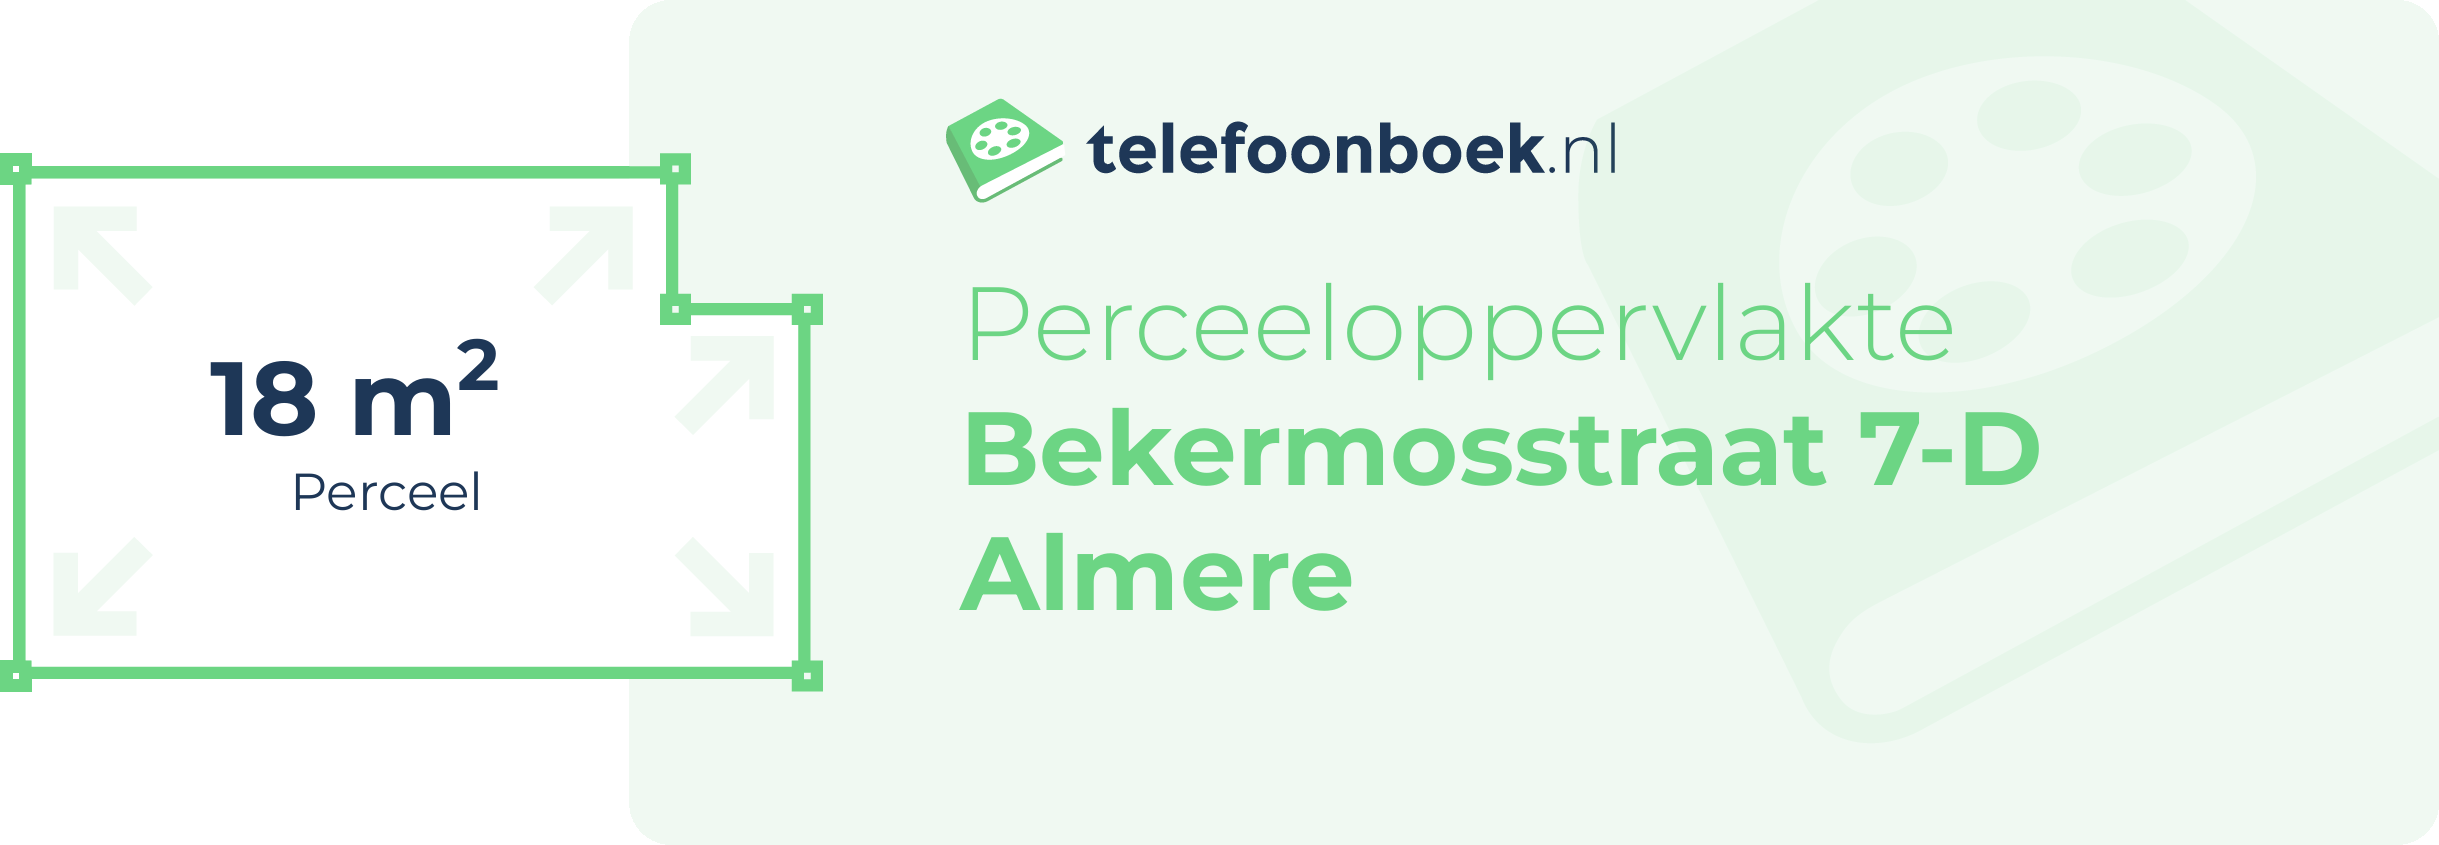 Perceeloppervlakte Bekermosstraat 7-D Almere